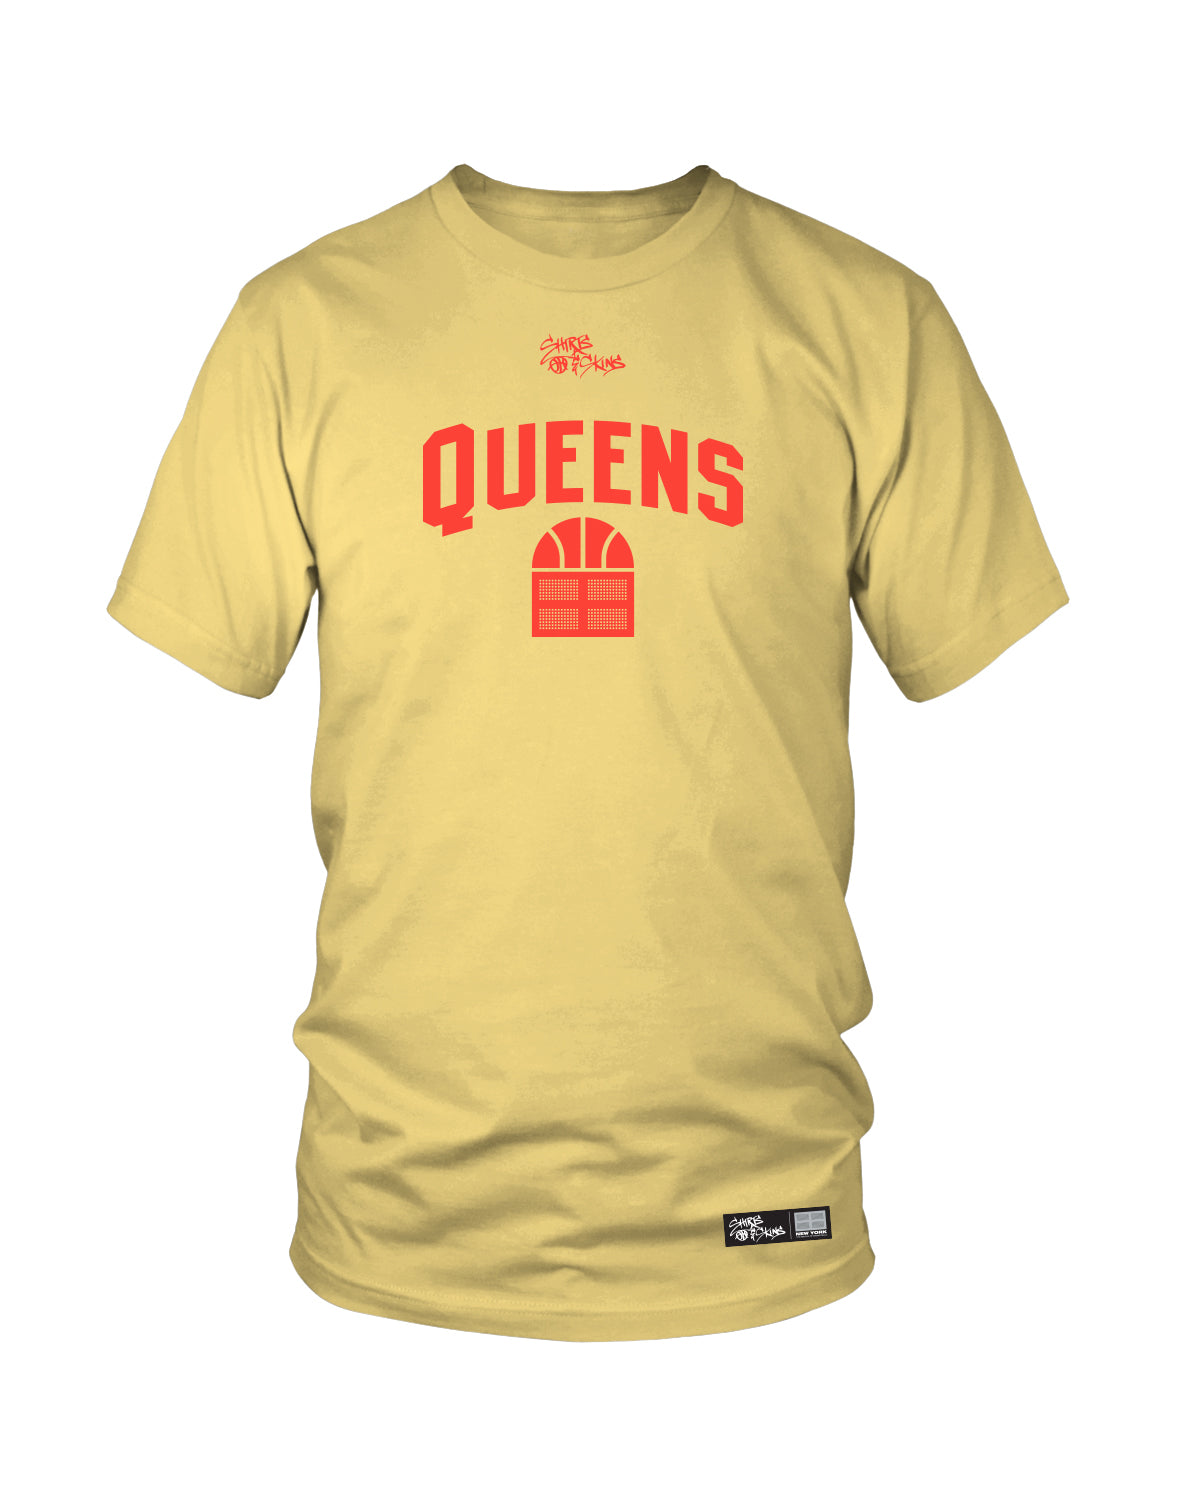 Shirts & Skins Banana Creme Queens Tee